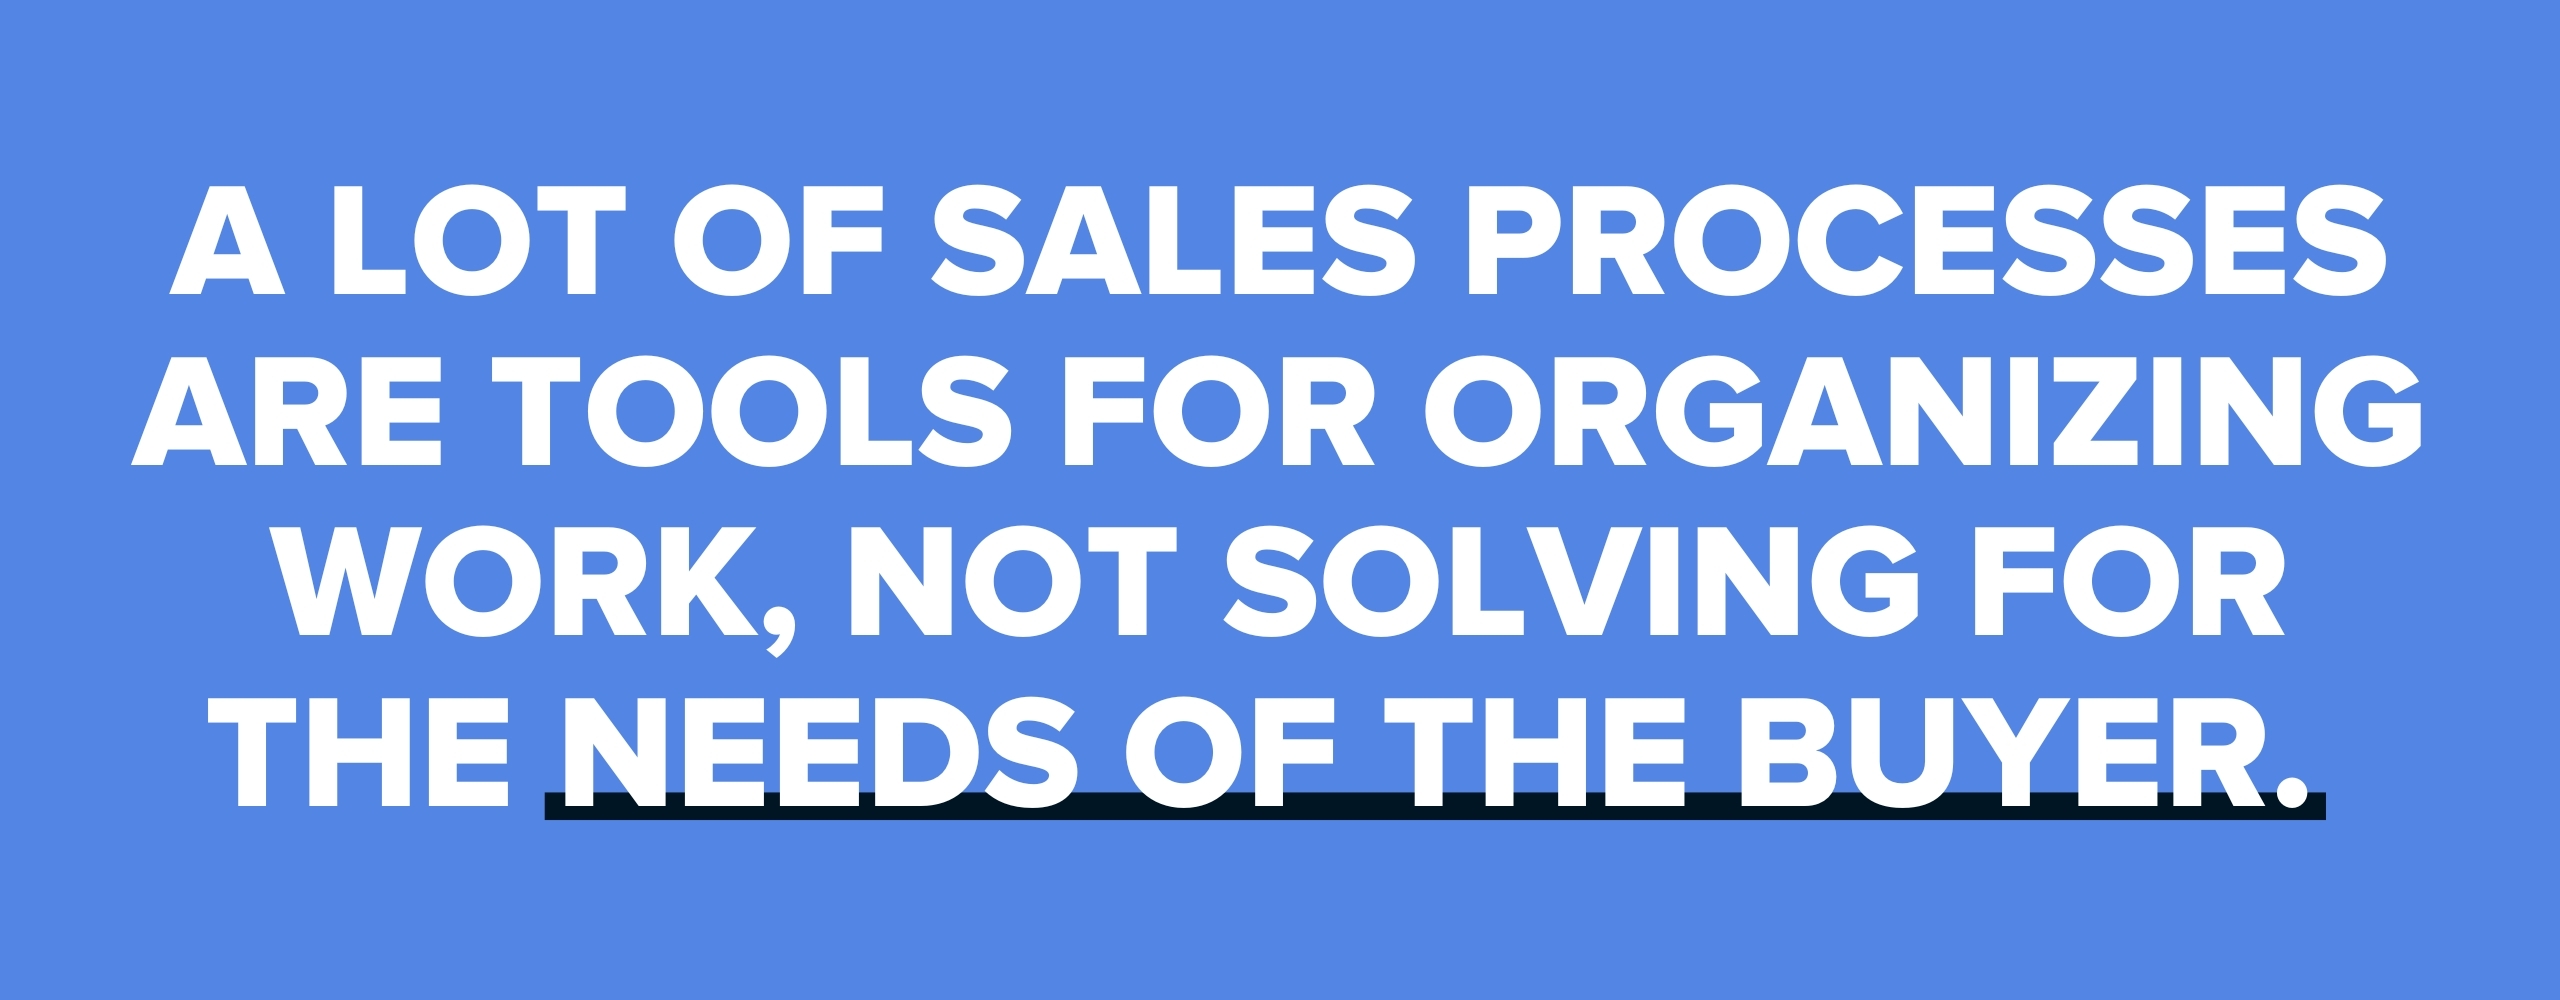 sales-process-organization